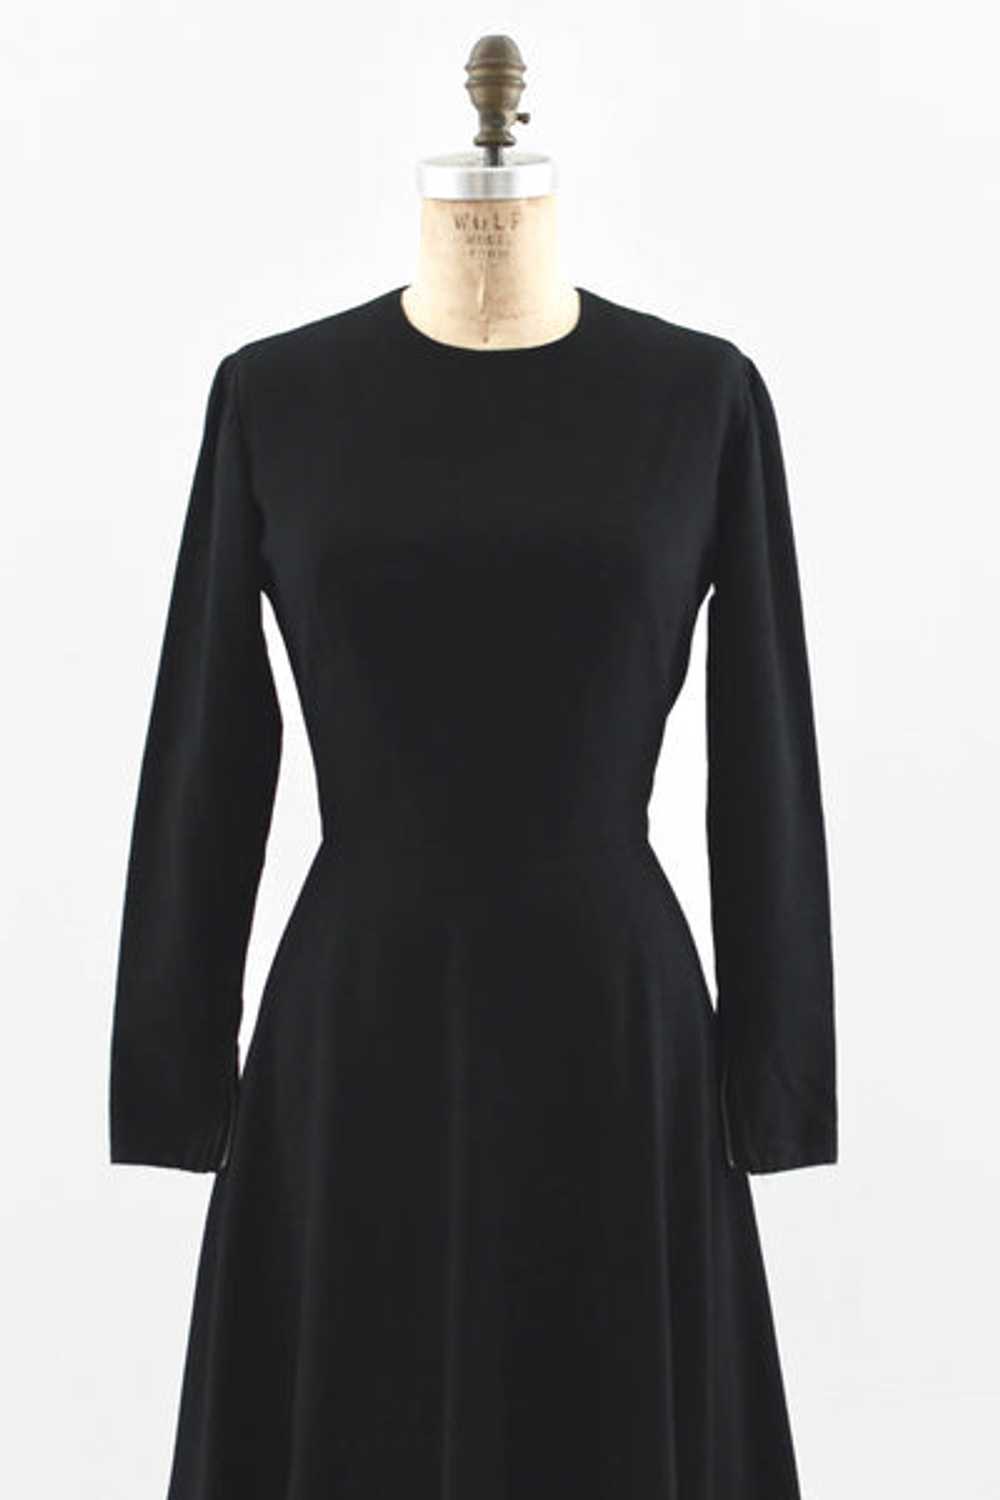 Neiman Marcus Wool Dress - image 3